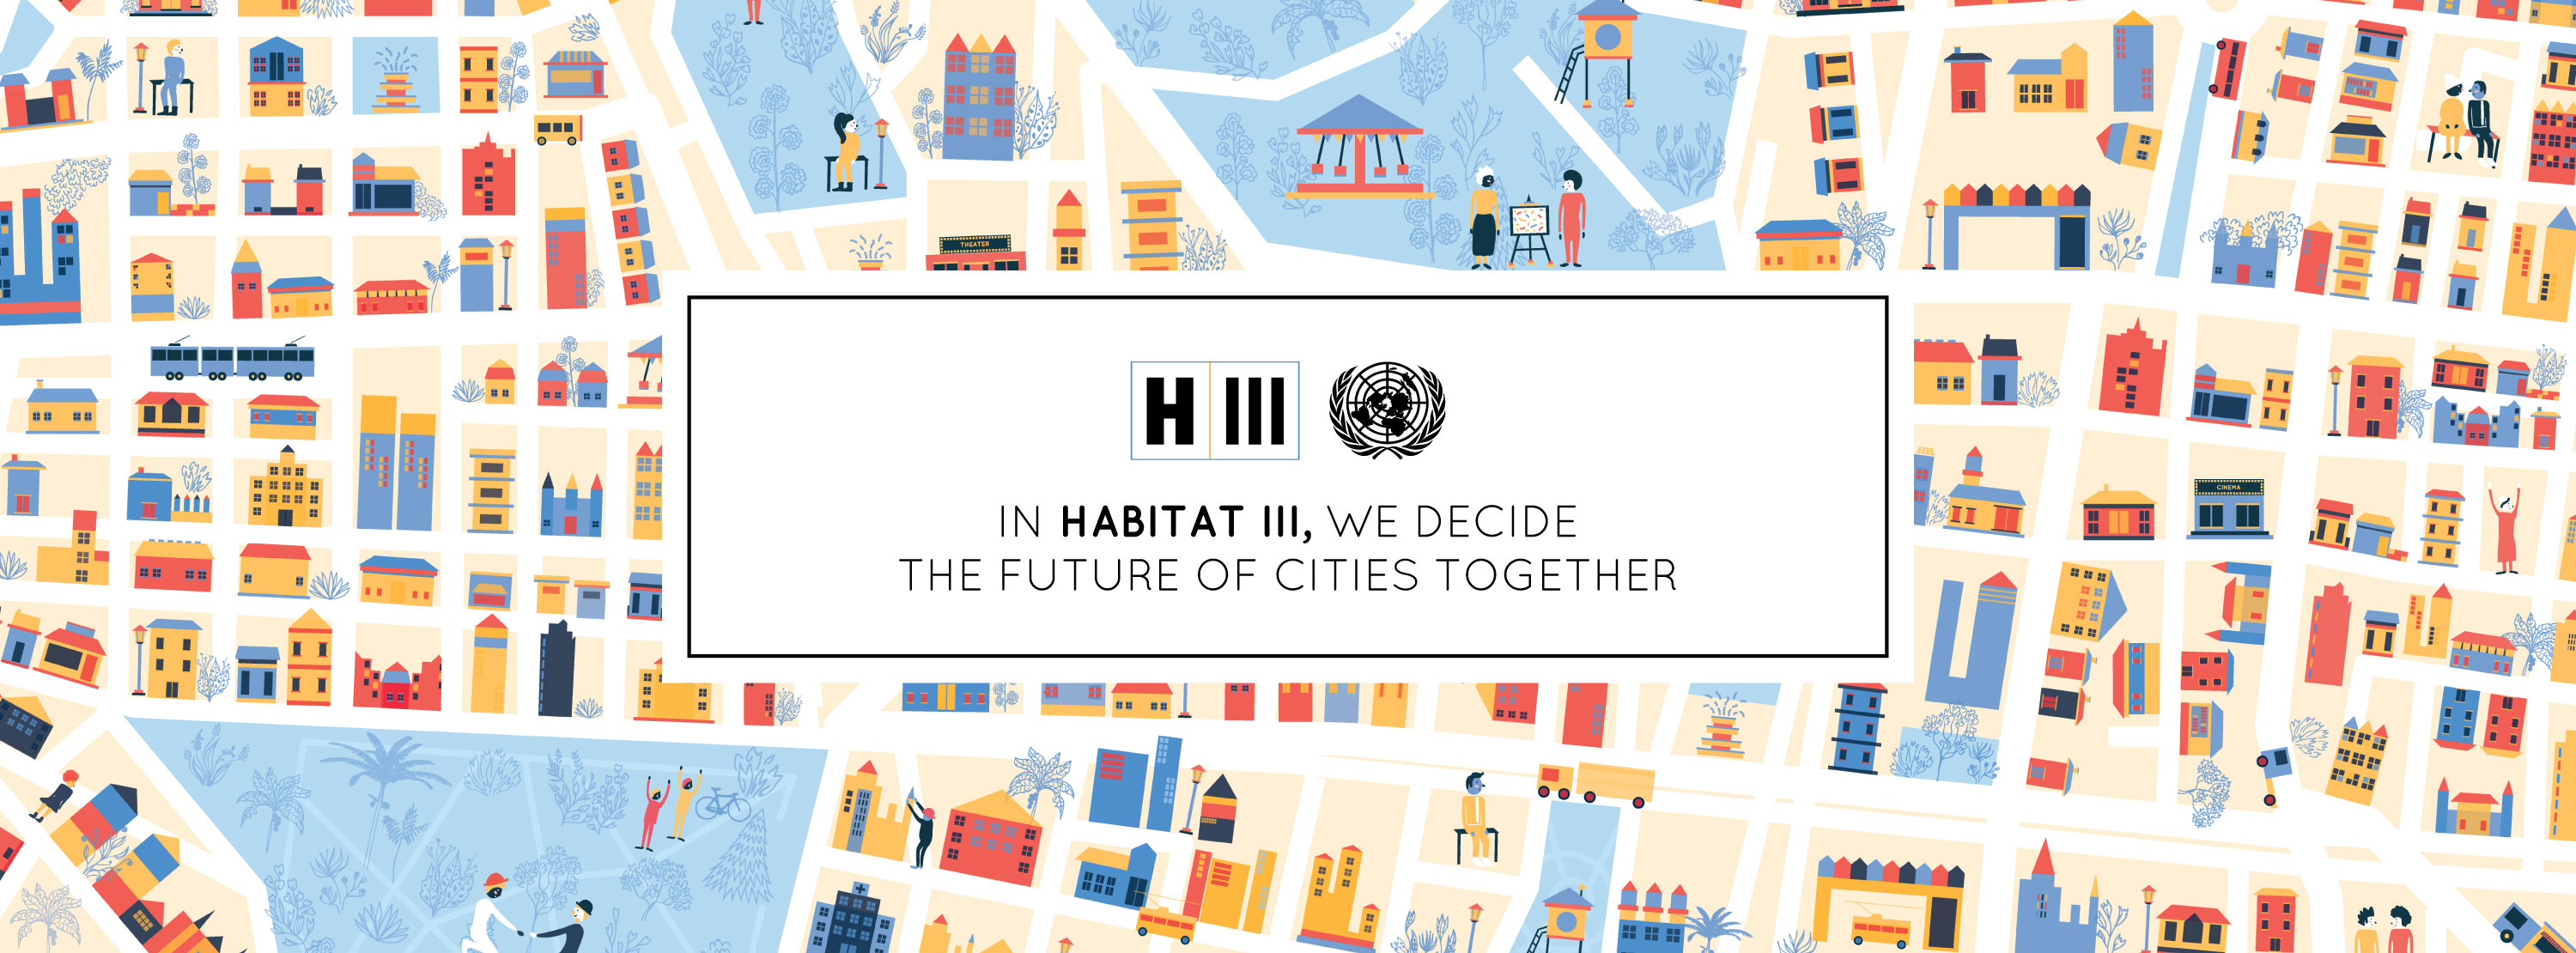 A New Urban Agenda is adopted at Habitat III